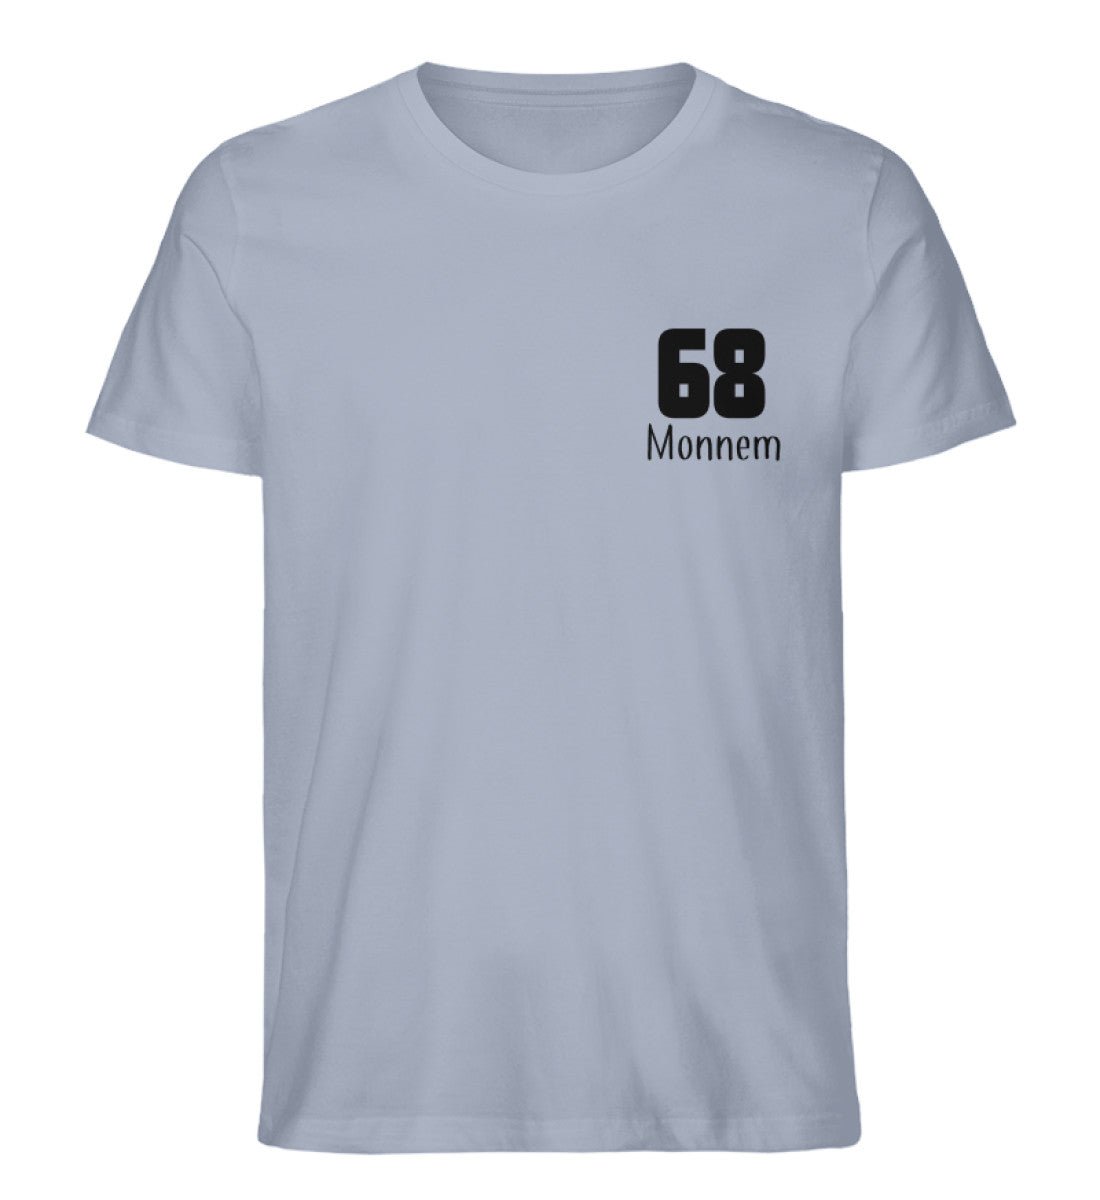 68 Monnem Herren Organic Shirt - talejo